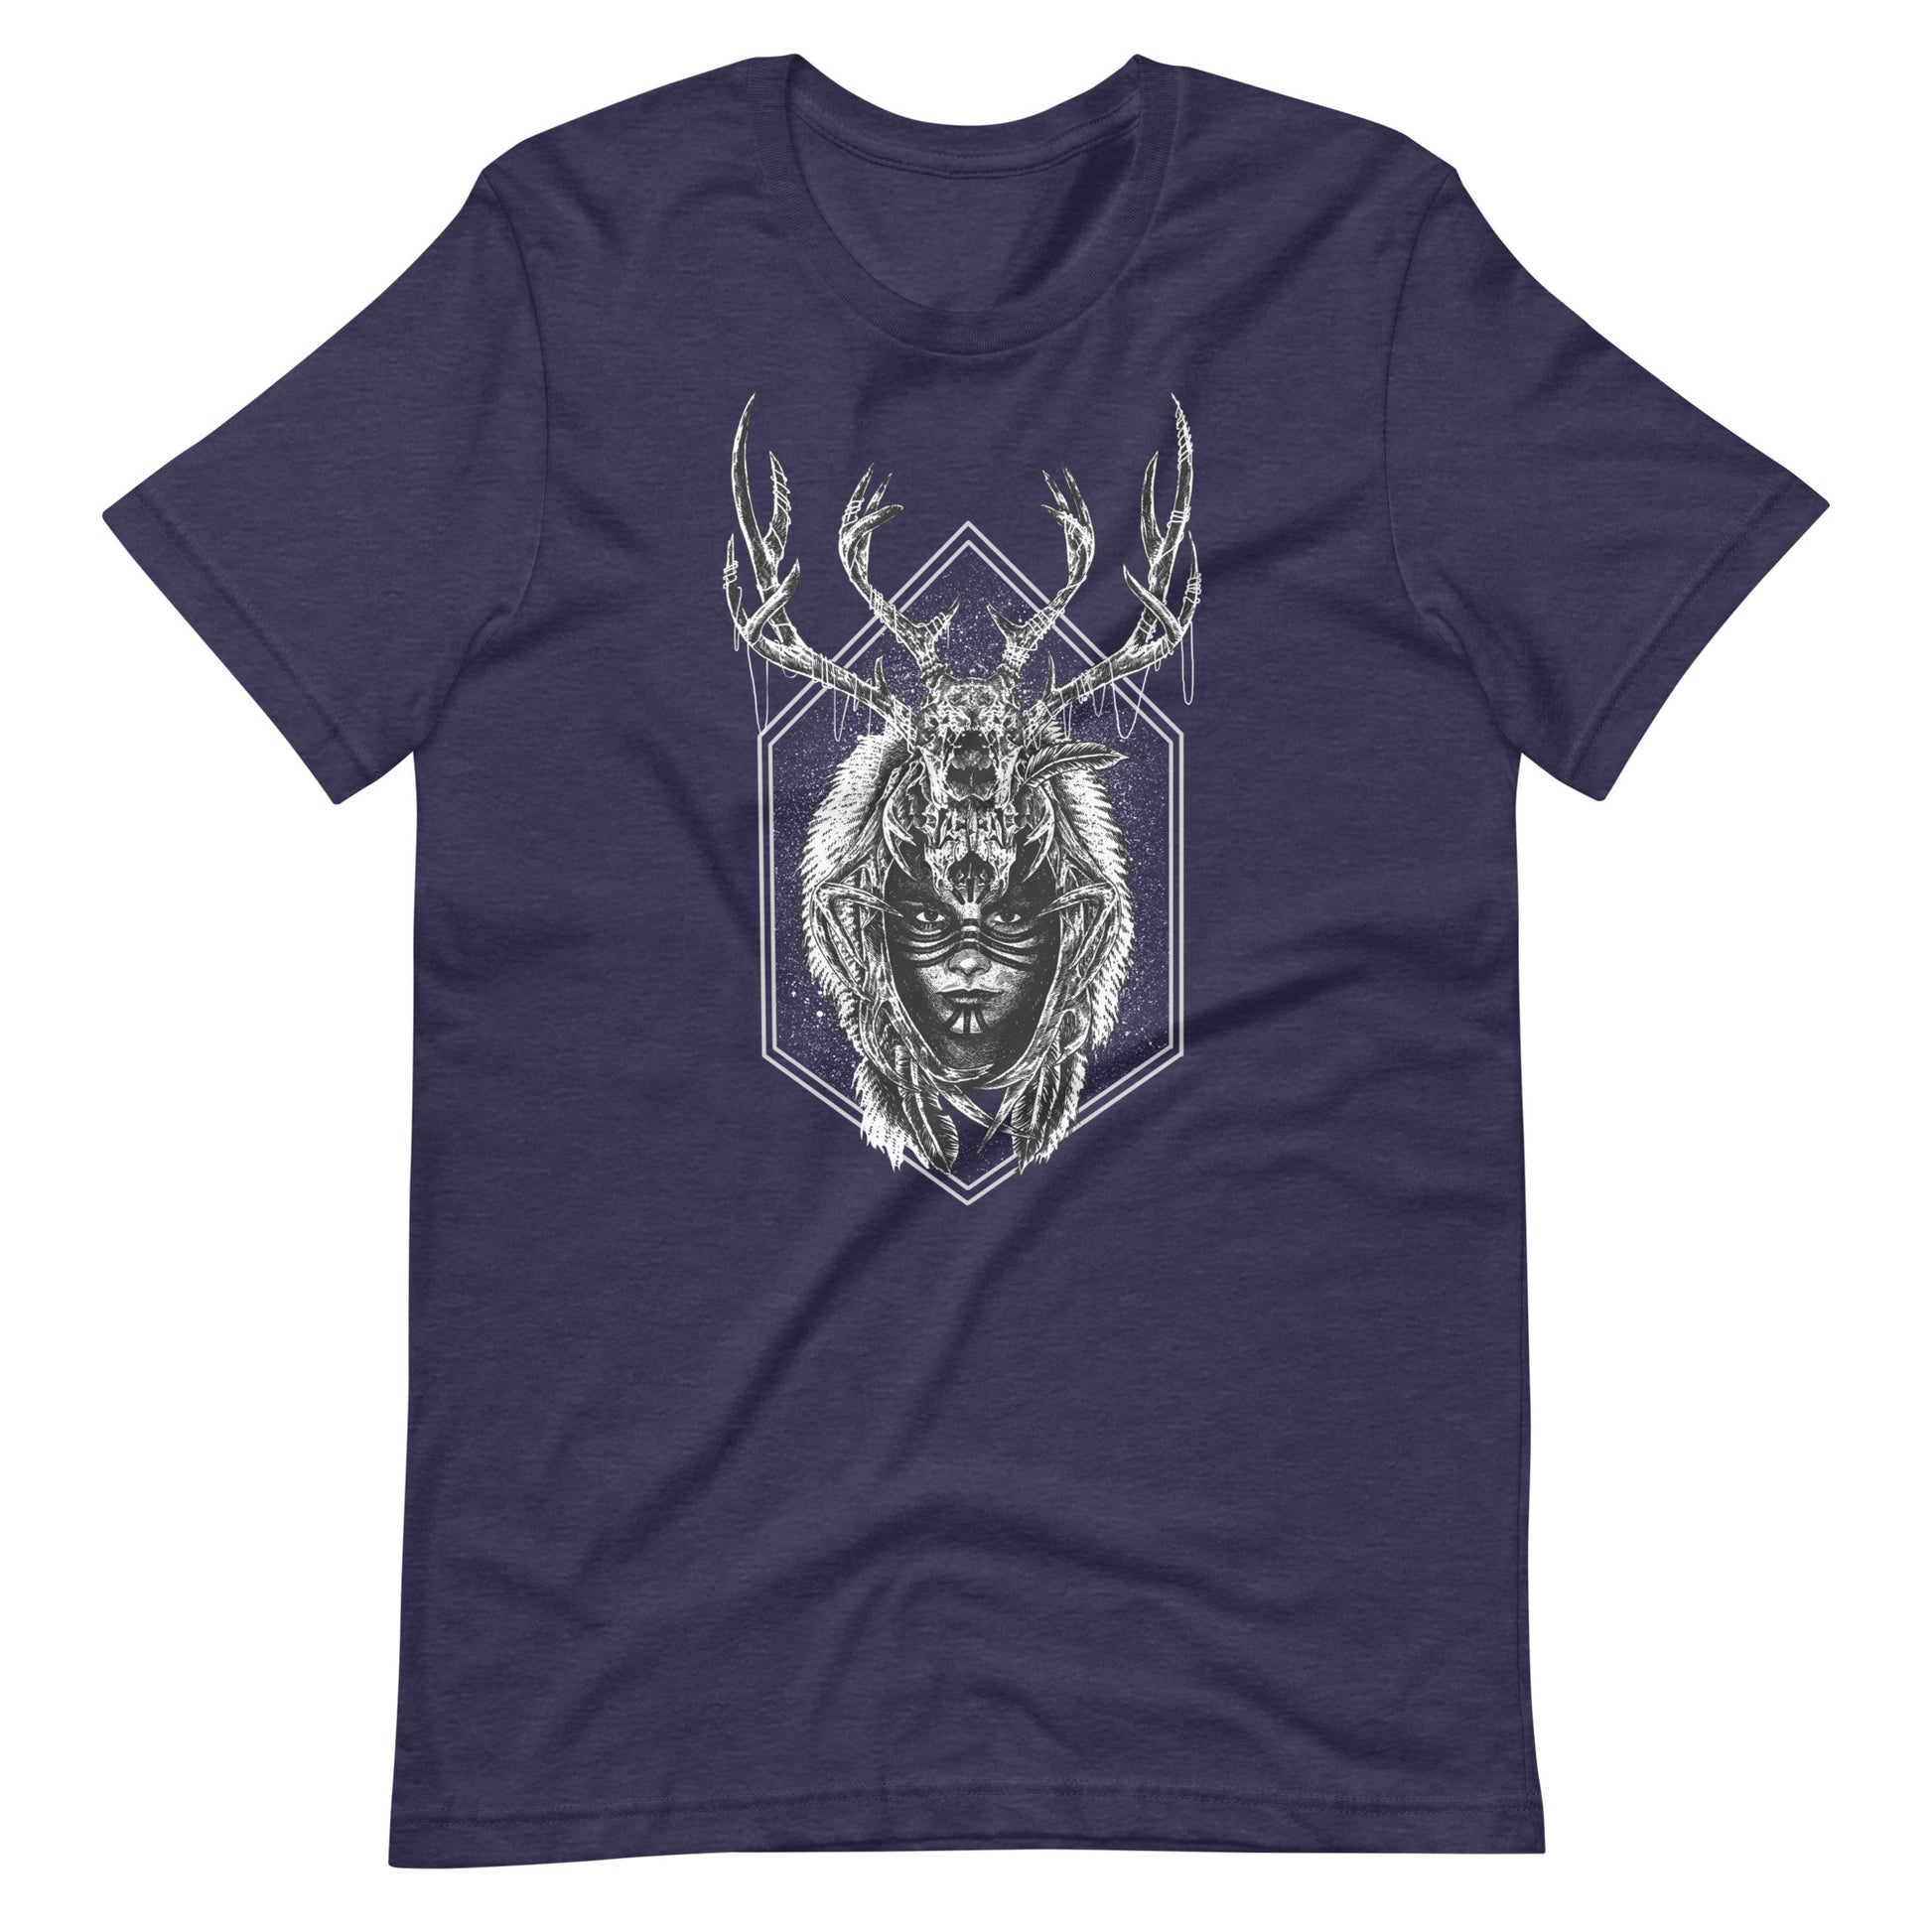 The Ruler - Men's t-shirt - Heather Midnight Navy Front